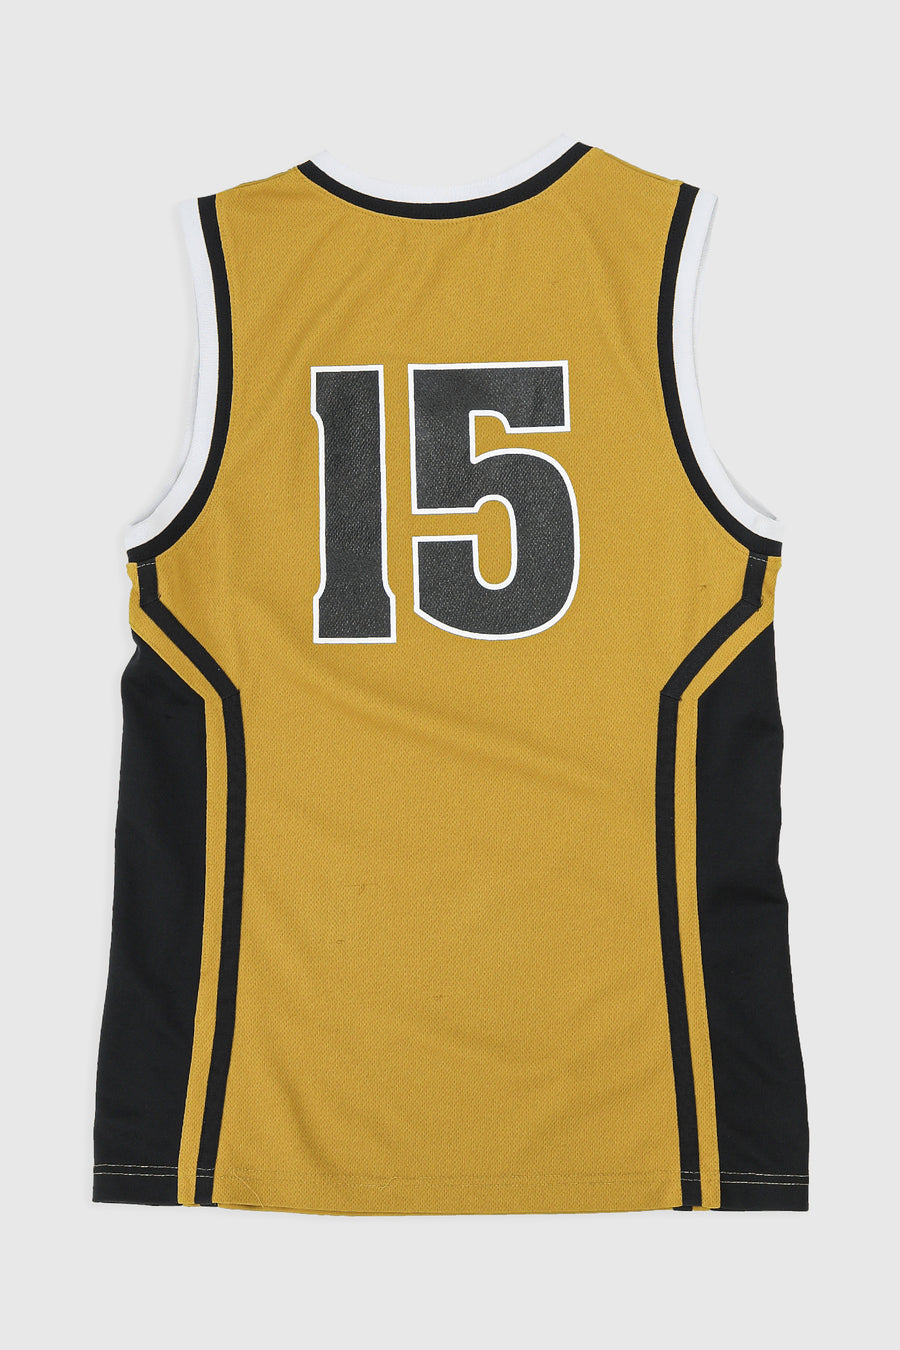 Vintage Tigers Basketball Jersey